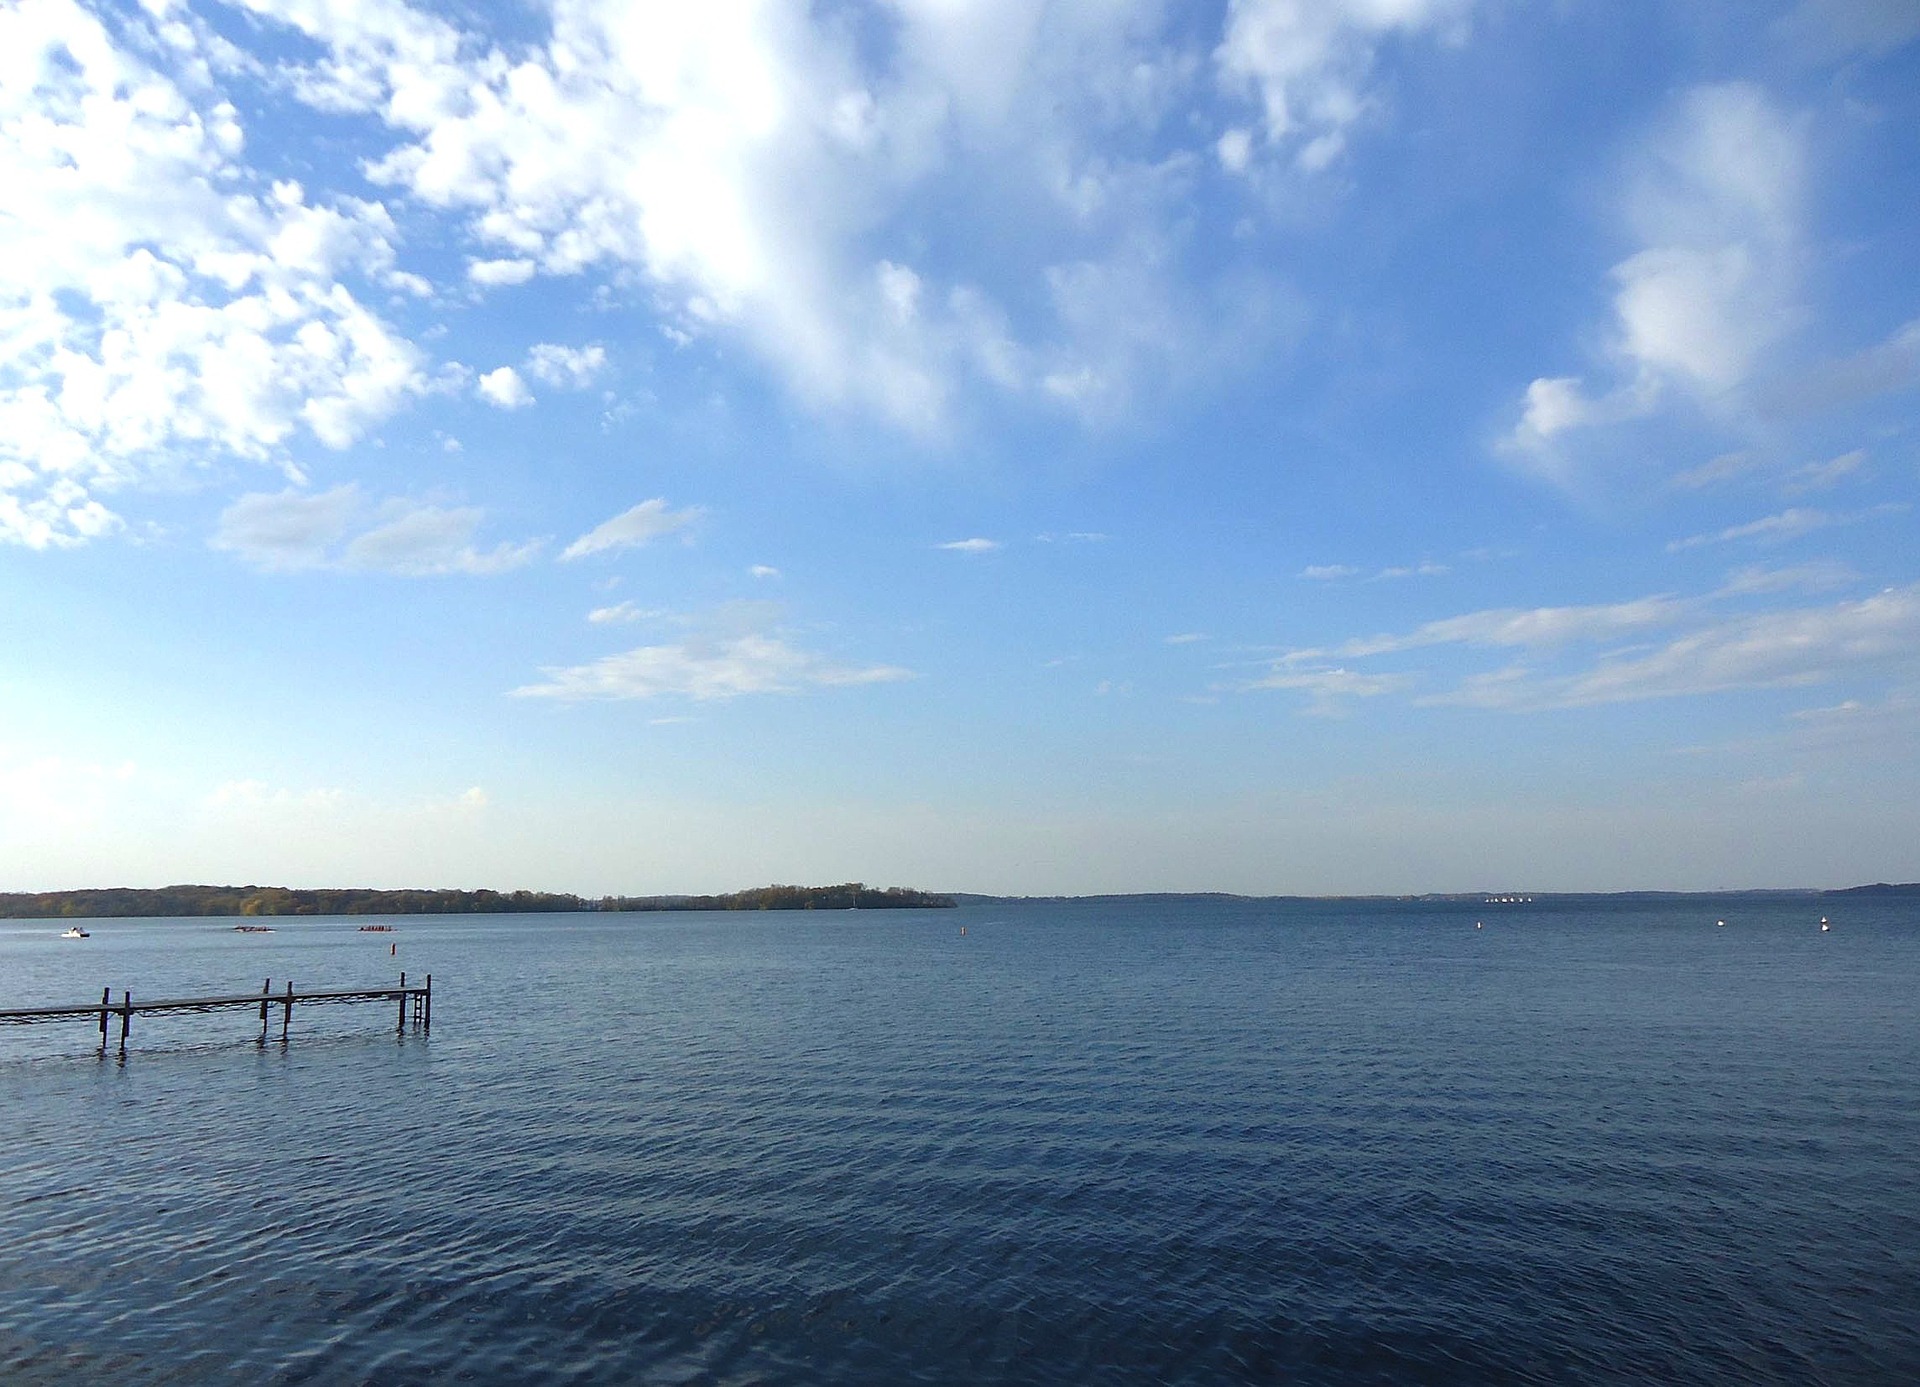 Calm lake with dock.